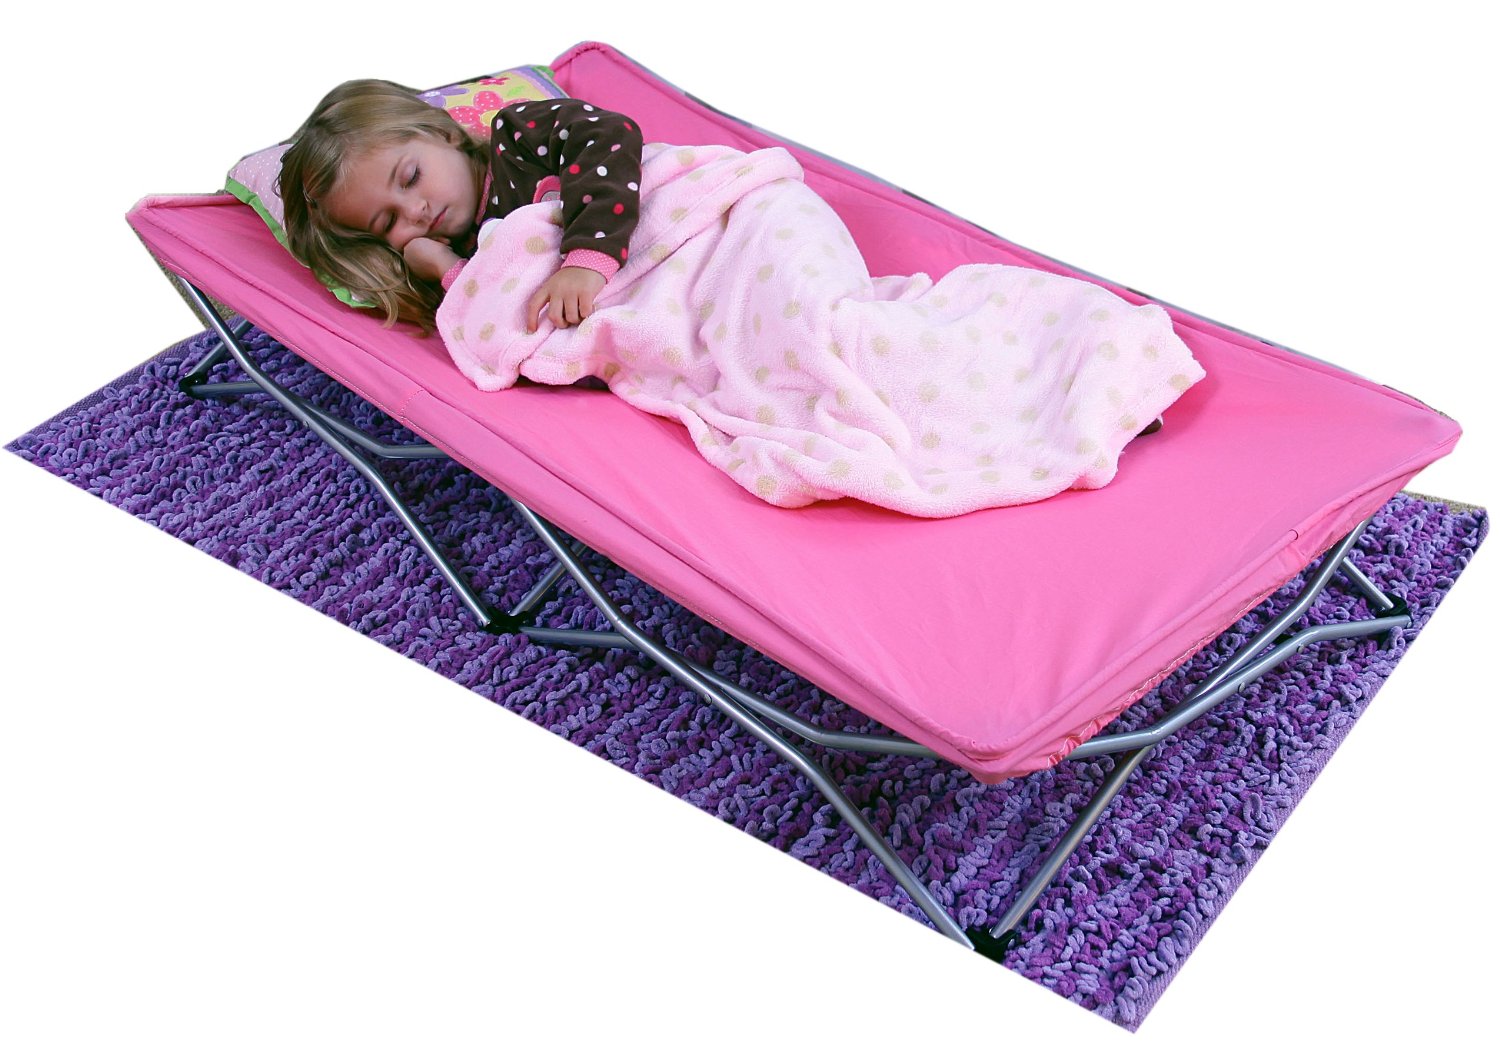 y Regalo z K |[^uxbh sN My Cot Portable Toddler Bed, Pink cpxbh ȈՃxbh W[ AEghA Lv C ysAiz